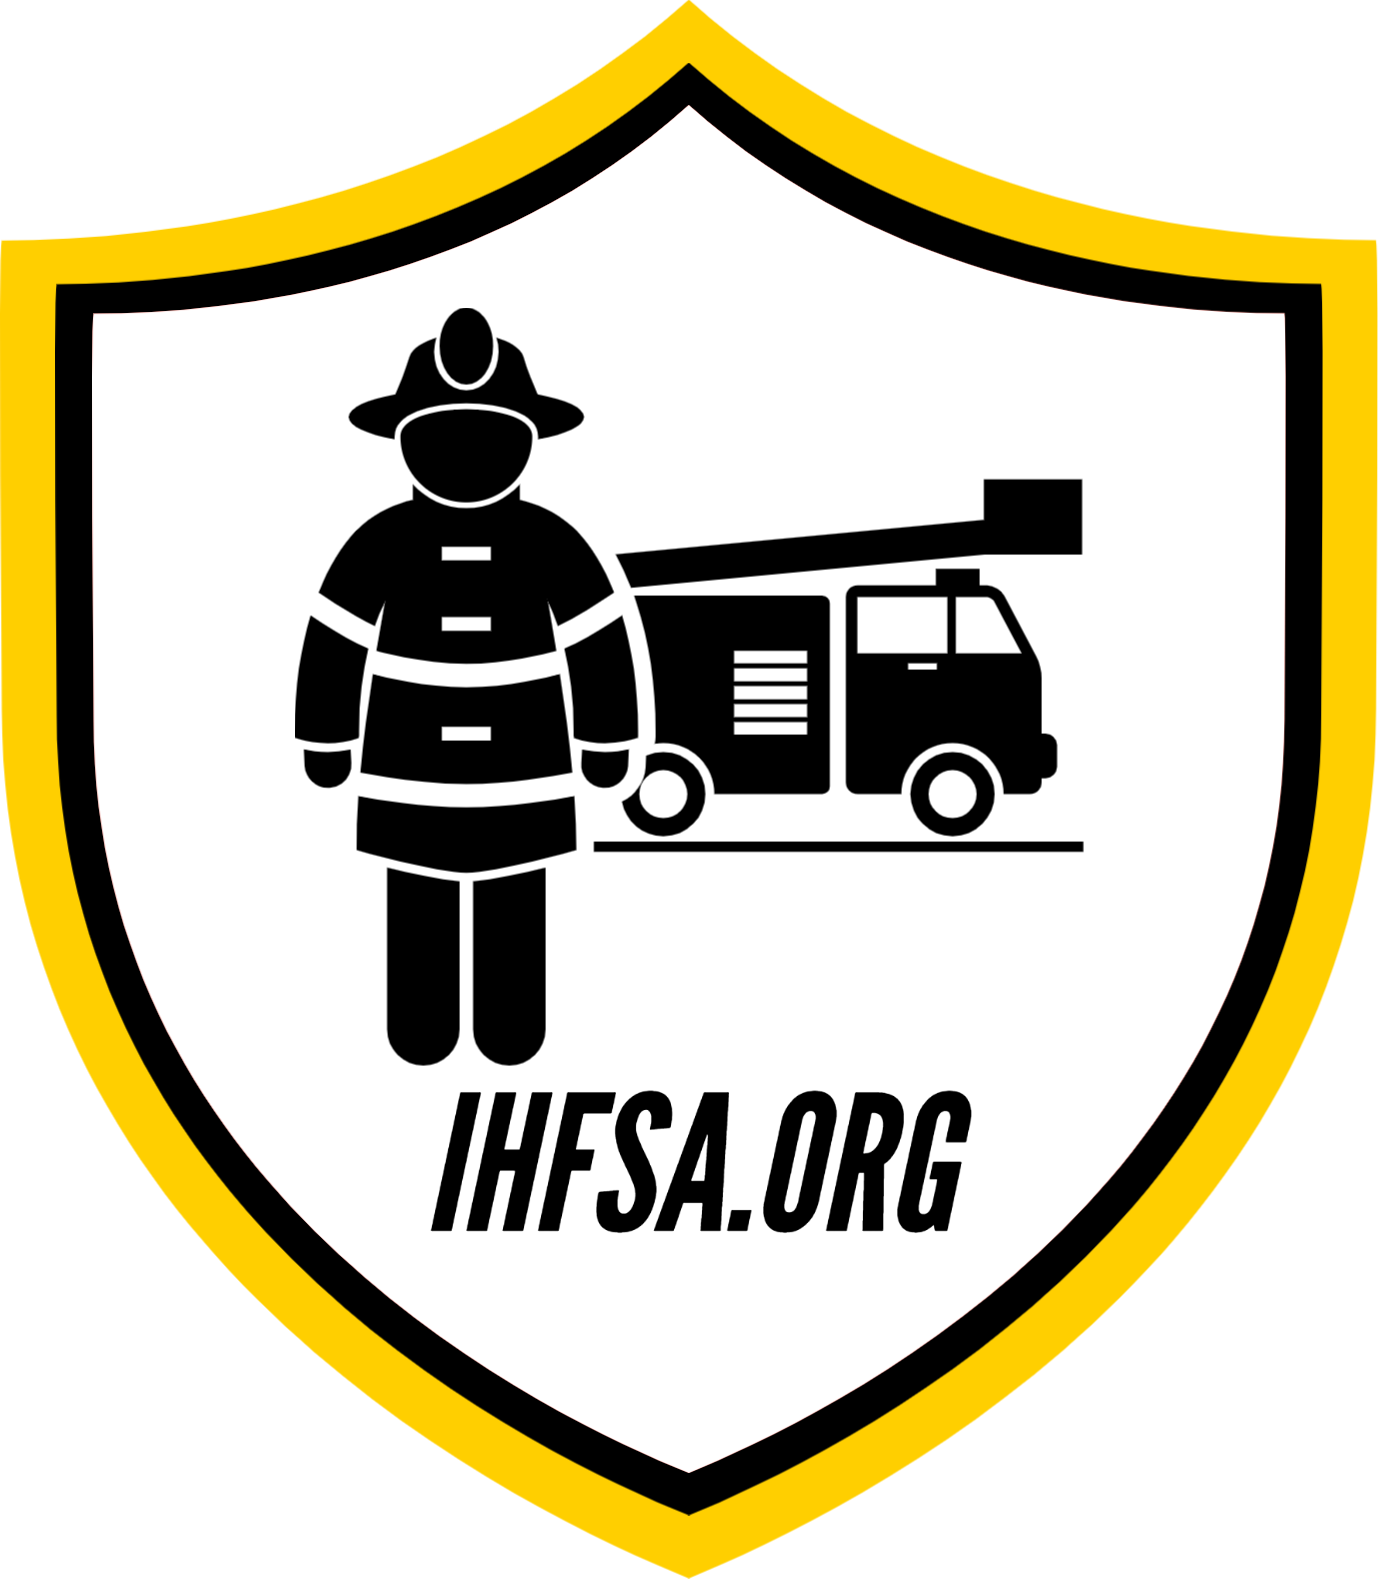 International Home Fire Safety Association